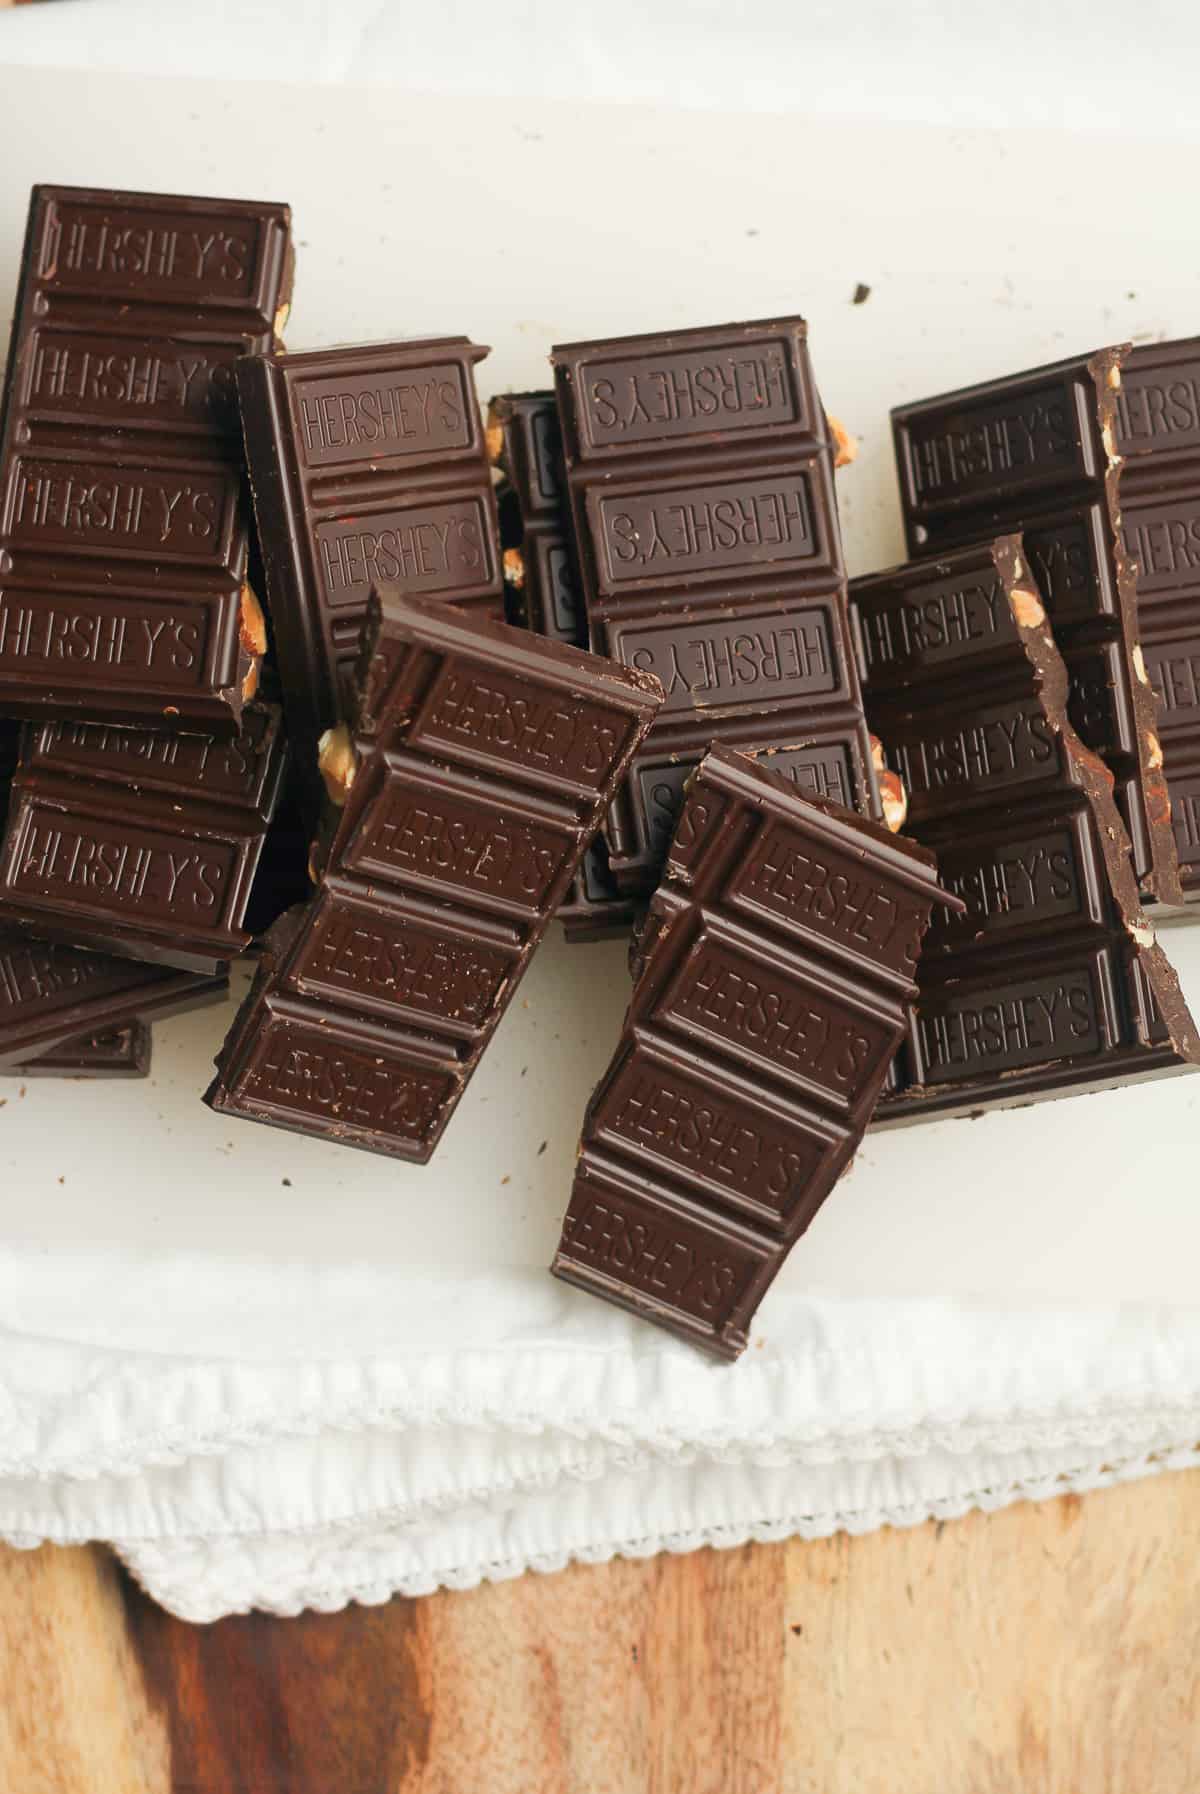 The chocolate bars in chunks.